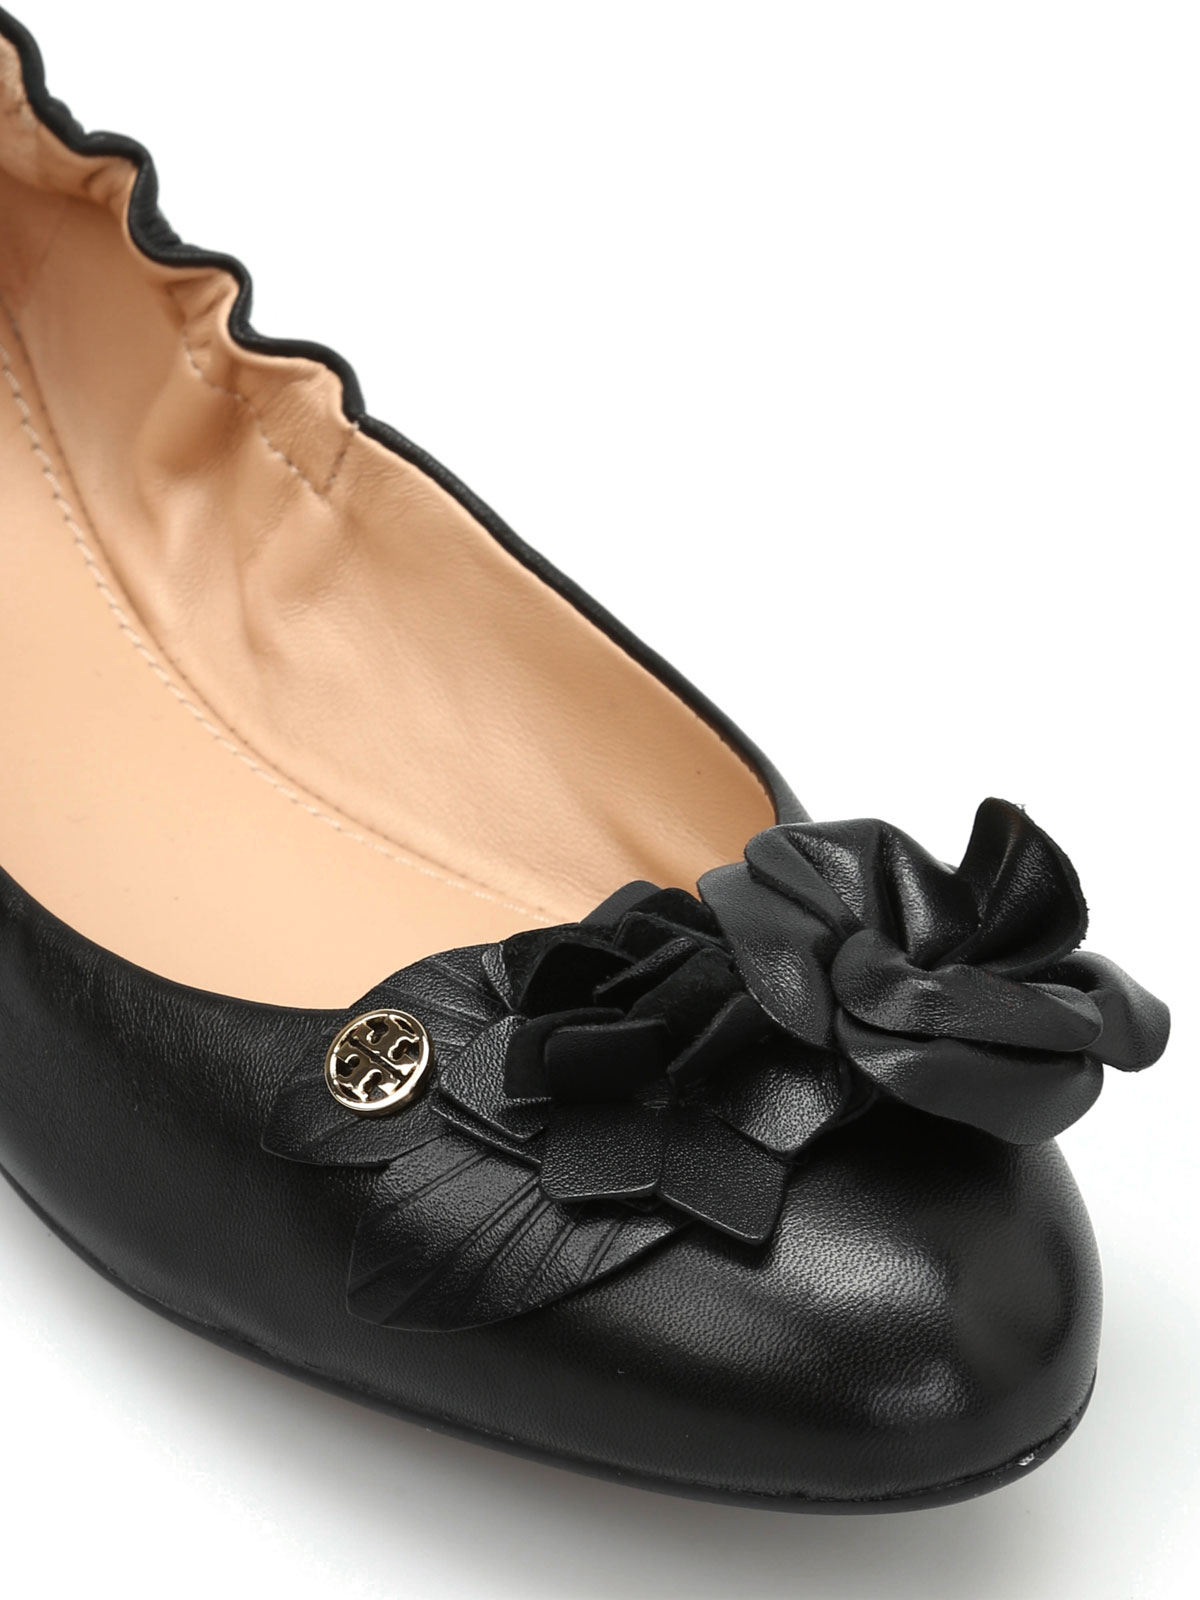 Flat shoes Tory Burch - Blossom Ballet flats - 32458001 